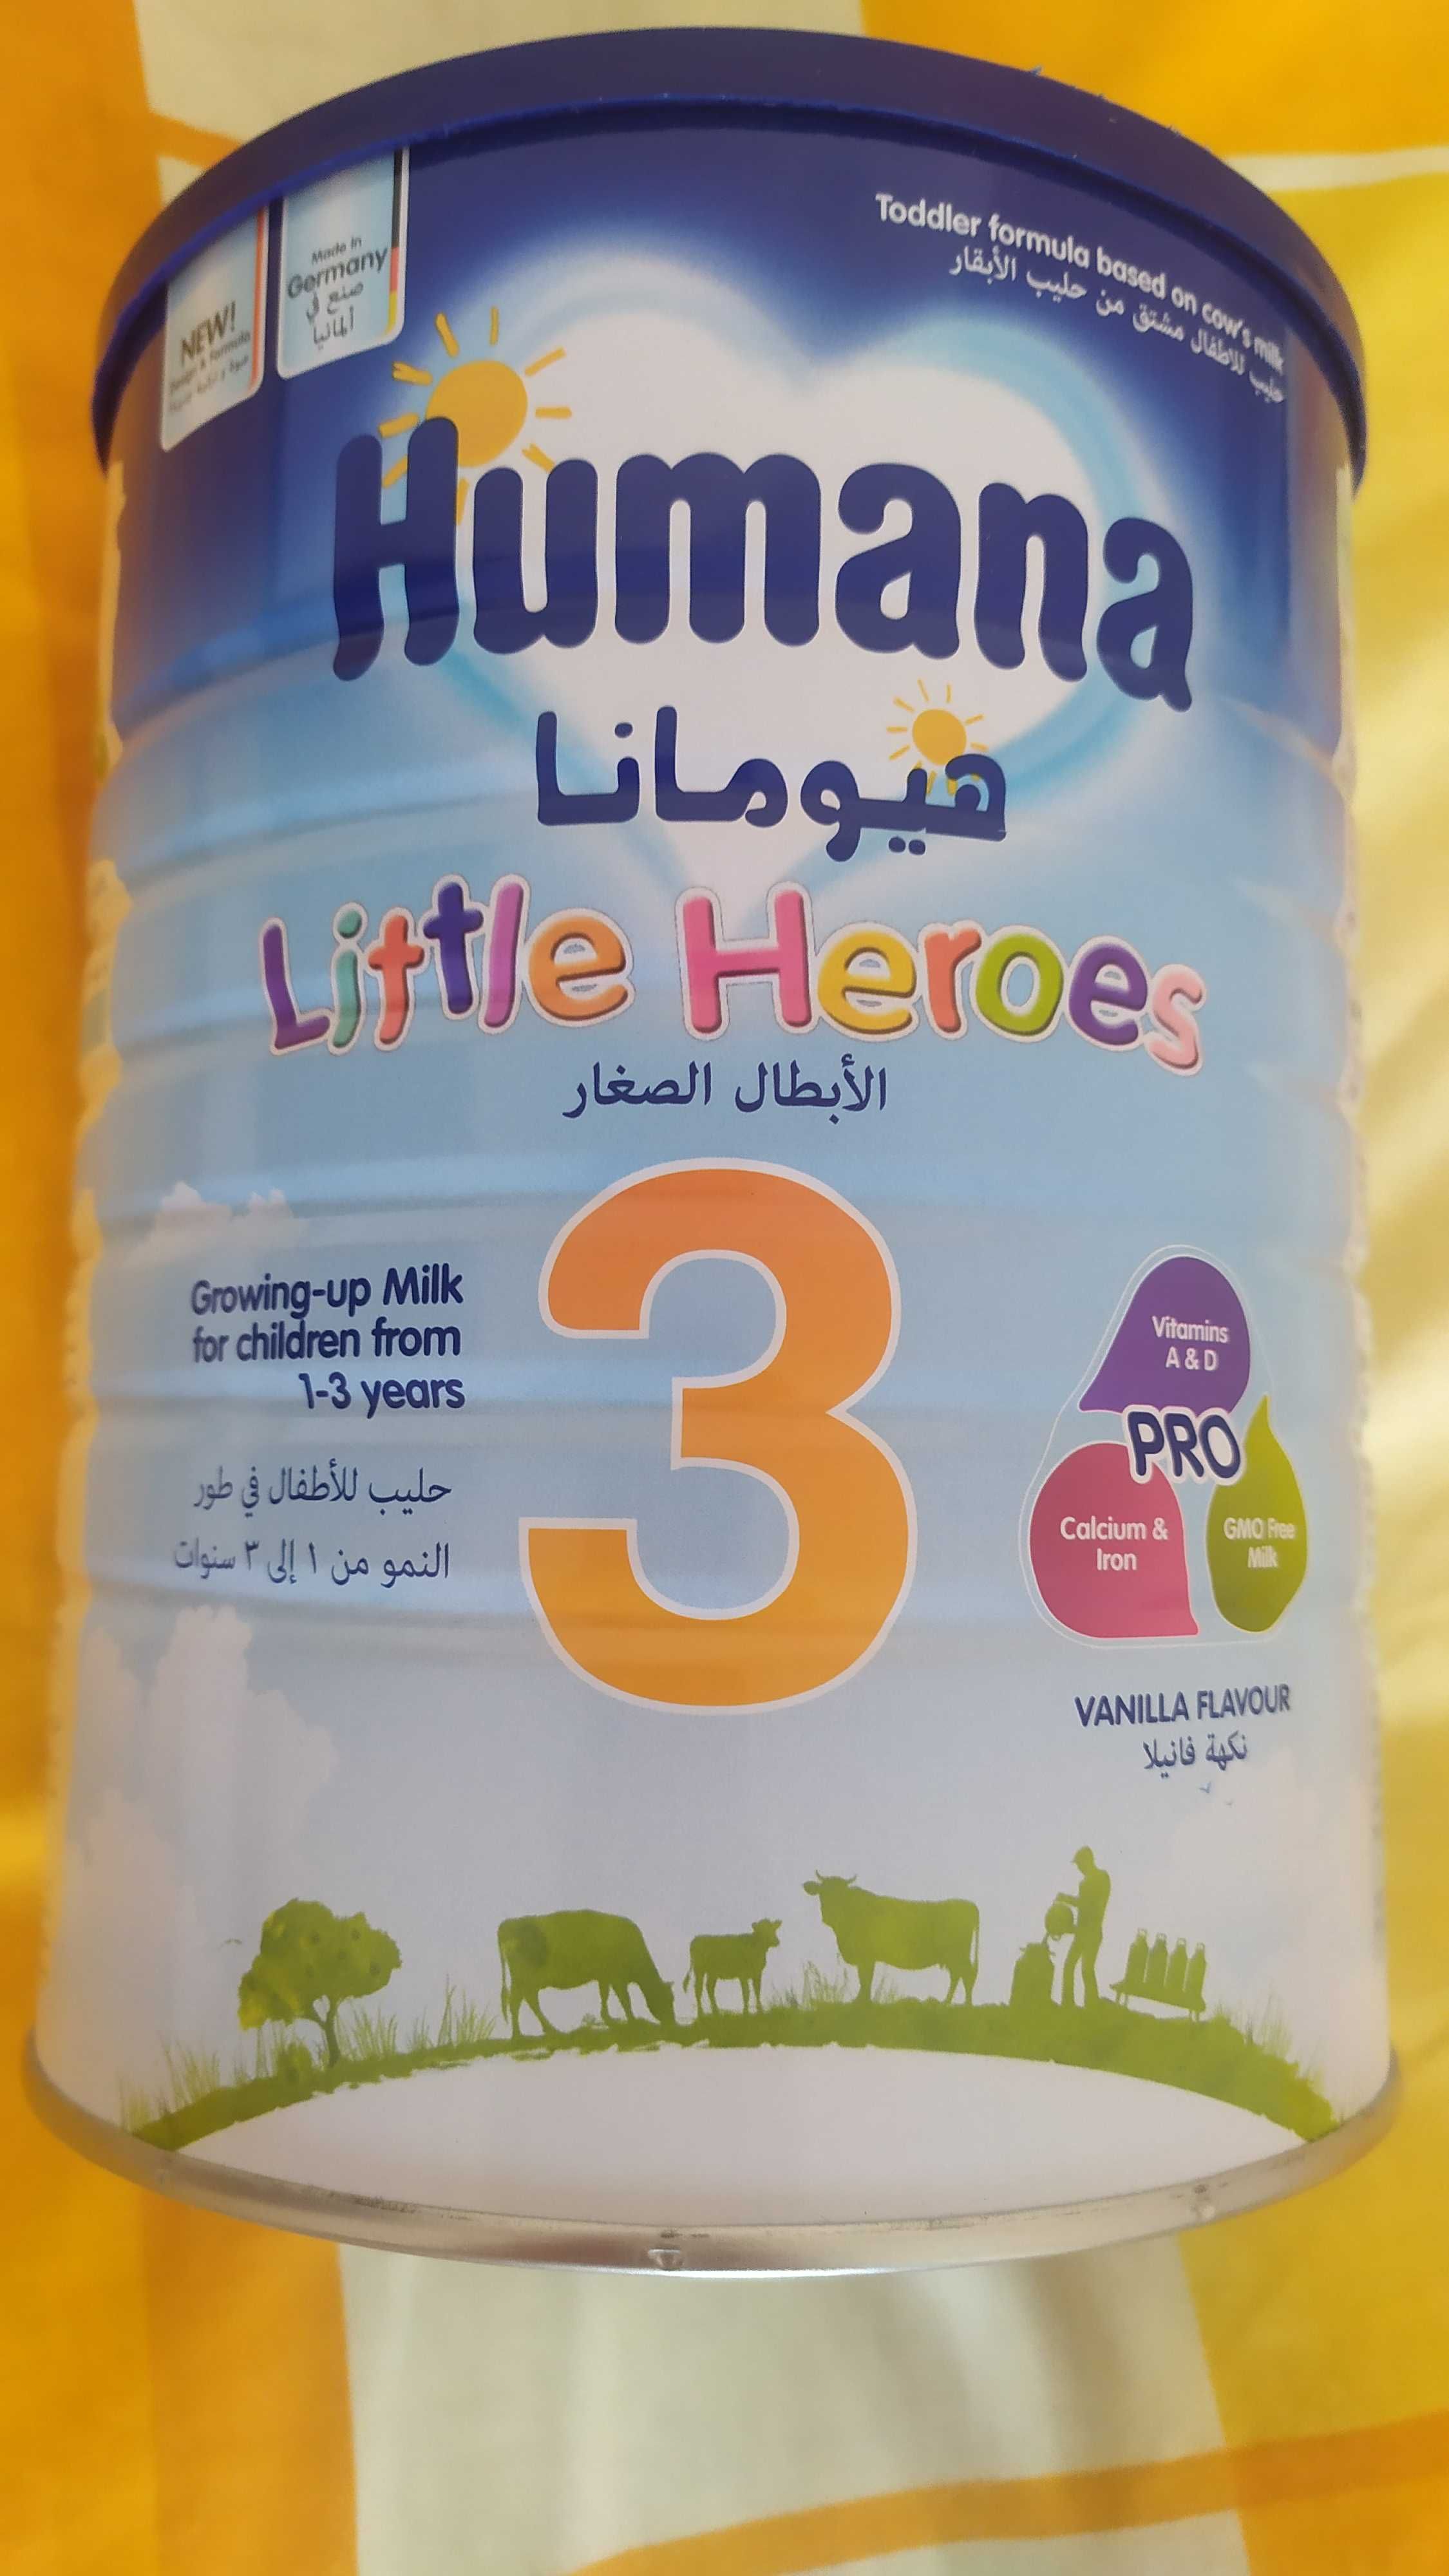 Humana 3 вага 900 грам Little heroes смесь, дитяче молоко Германия